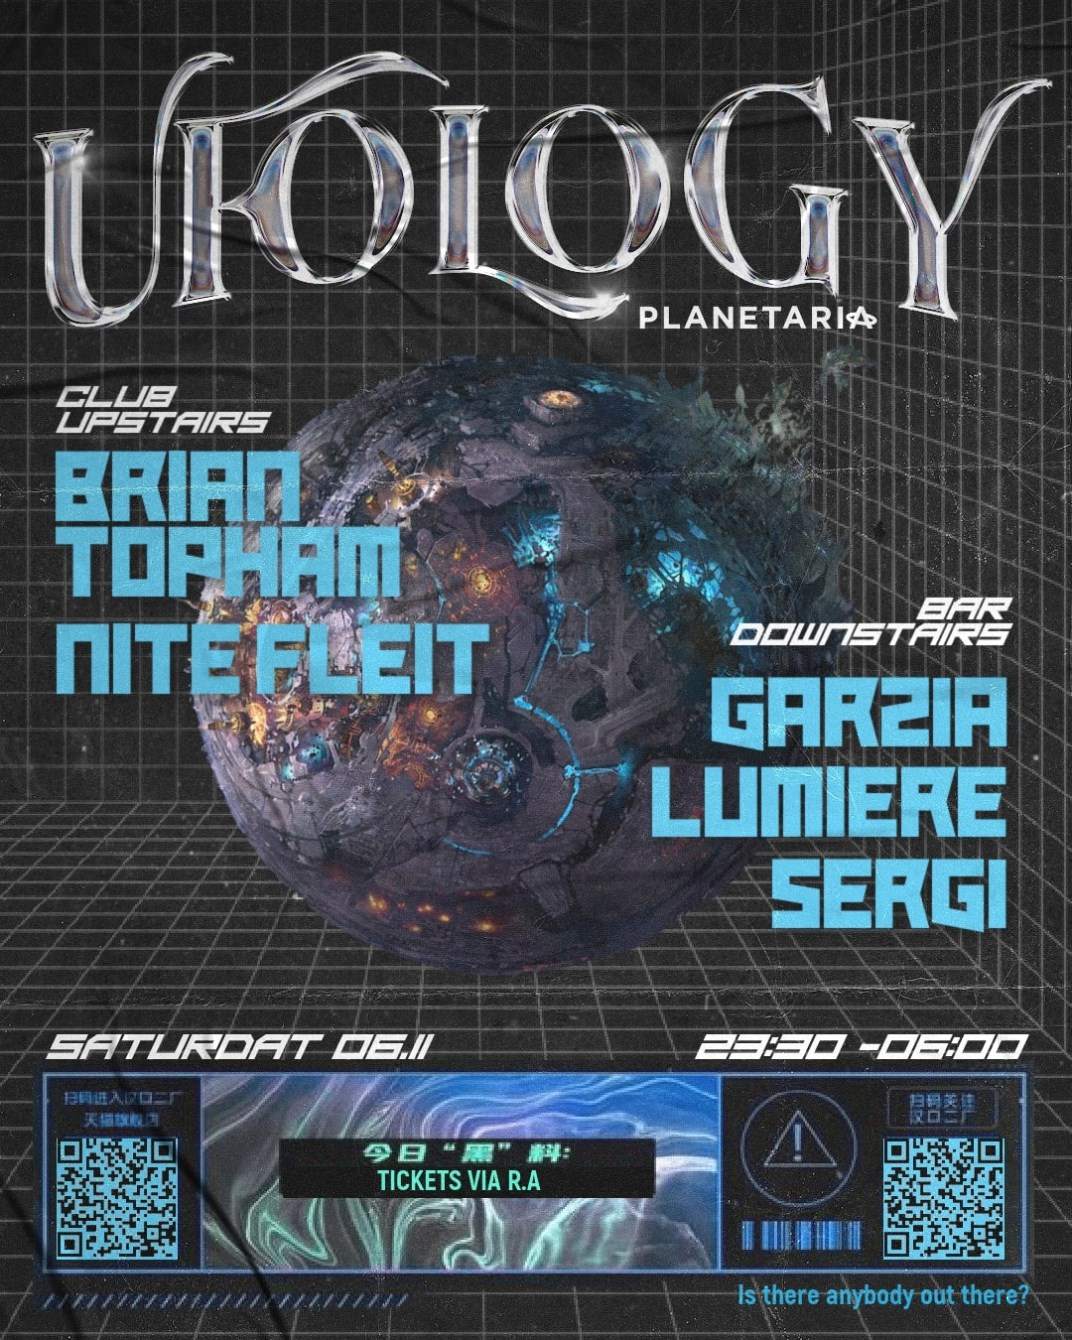 Ufology x Planetaria with Nite Fleit & Lumiere - Página frontal